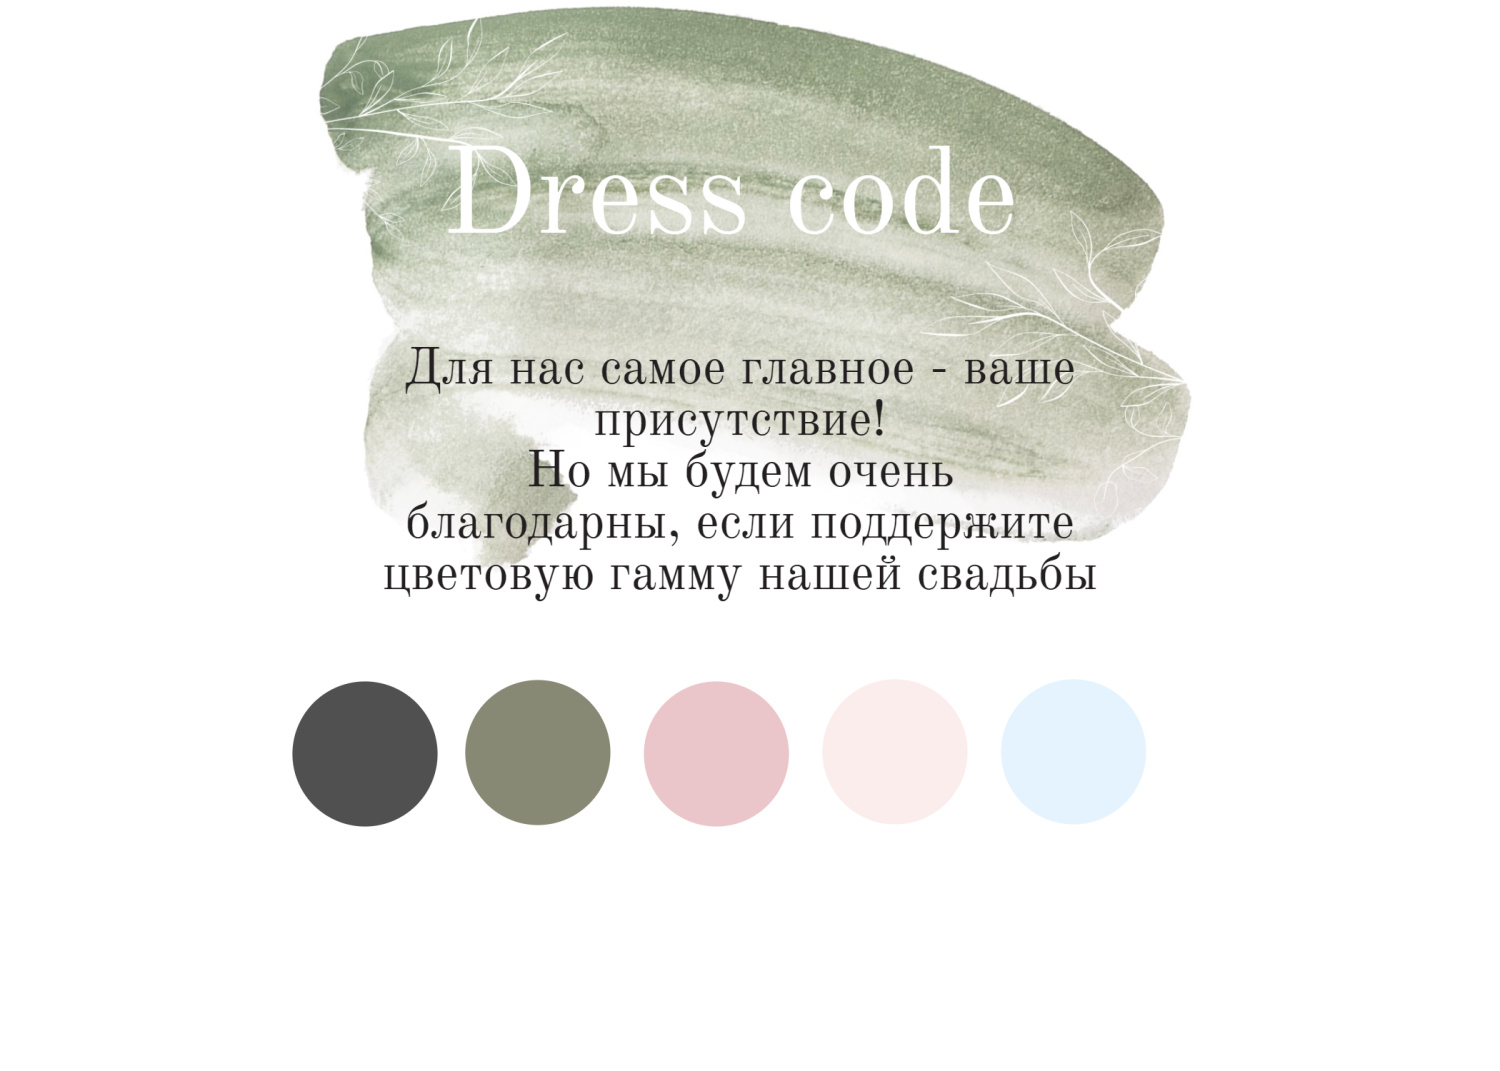 Дресс-код в стиле минимализм зеленого цвета